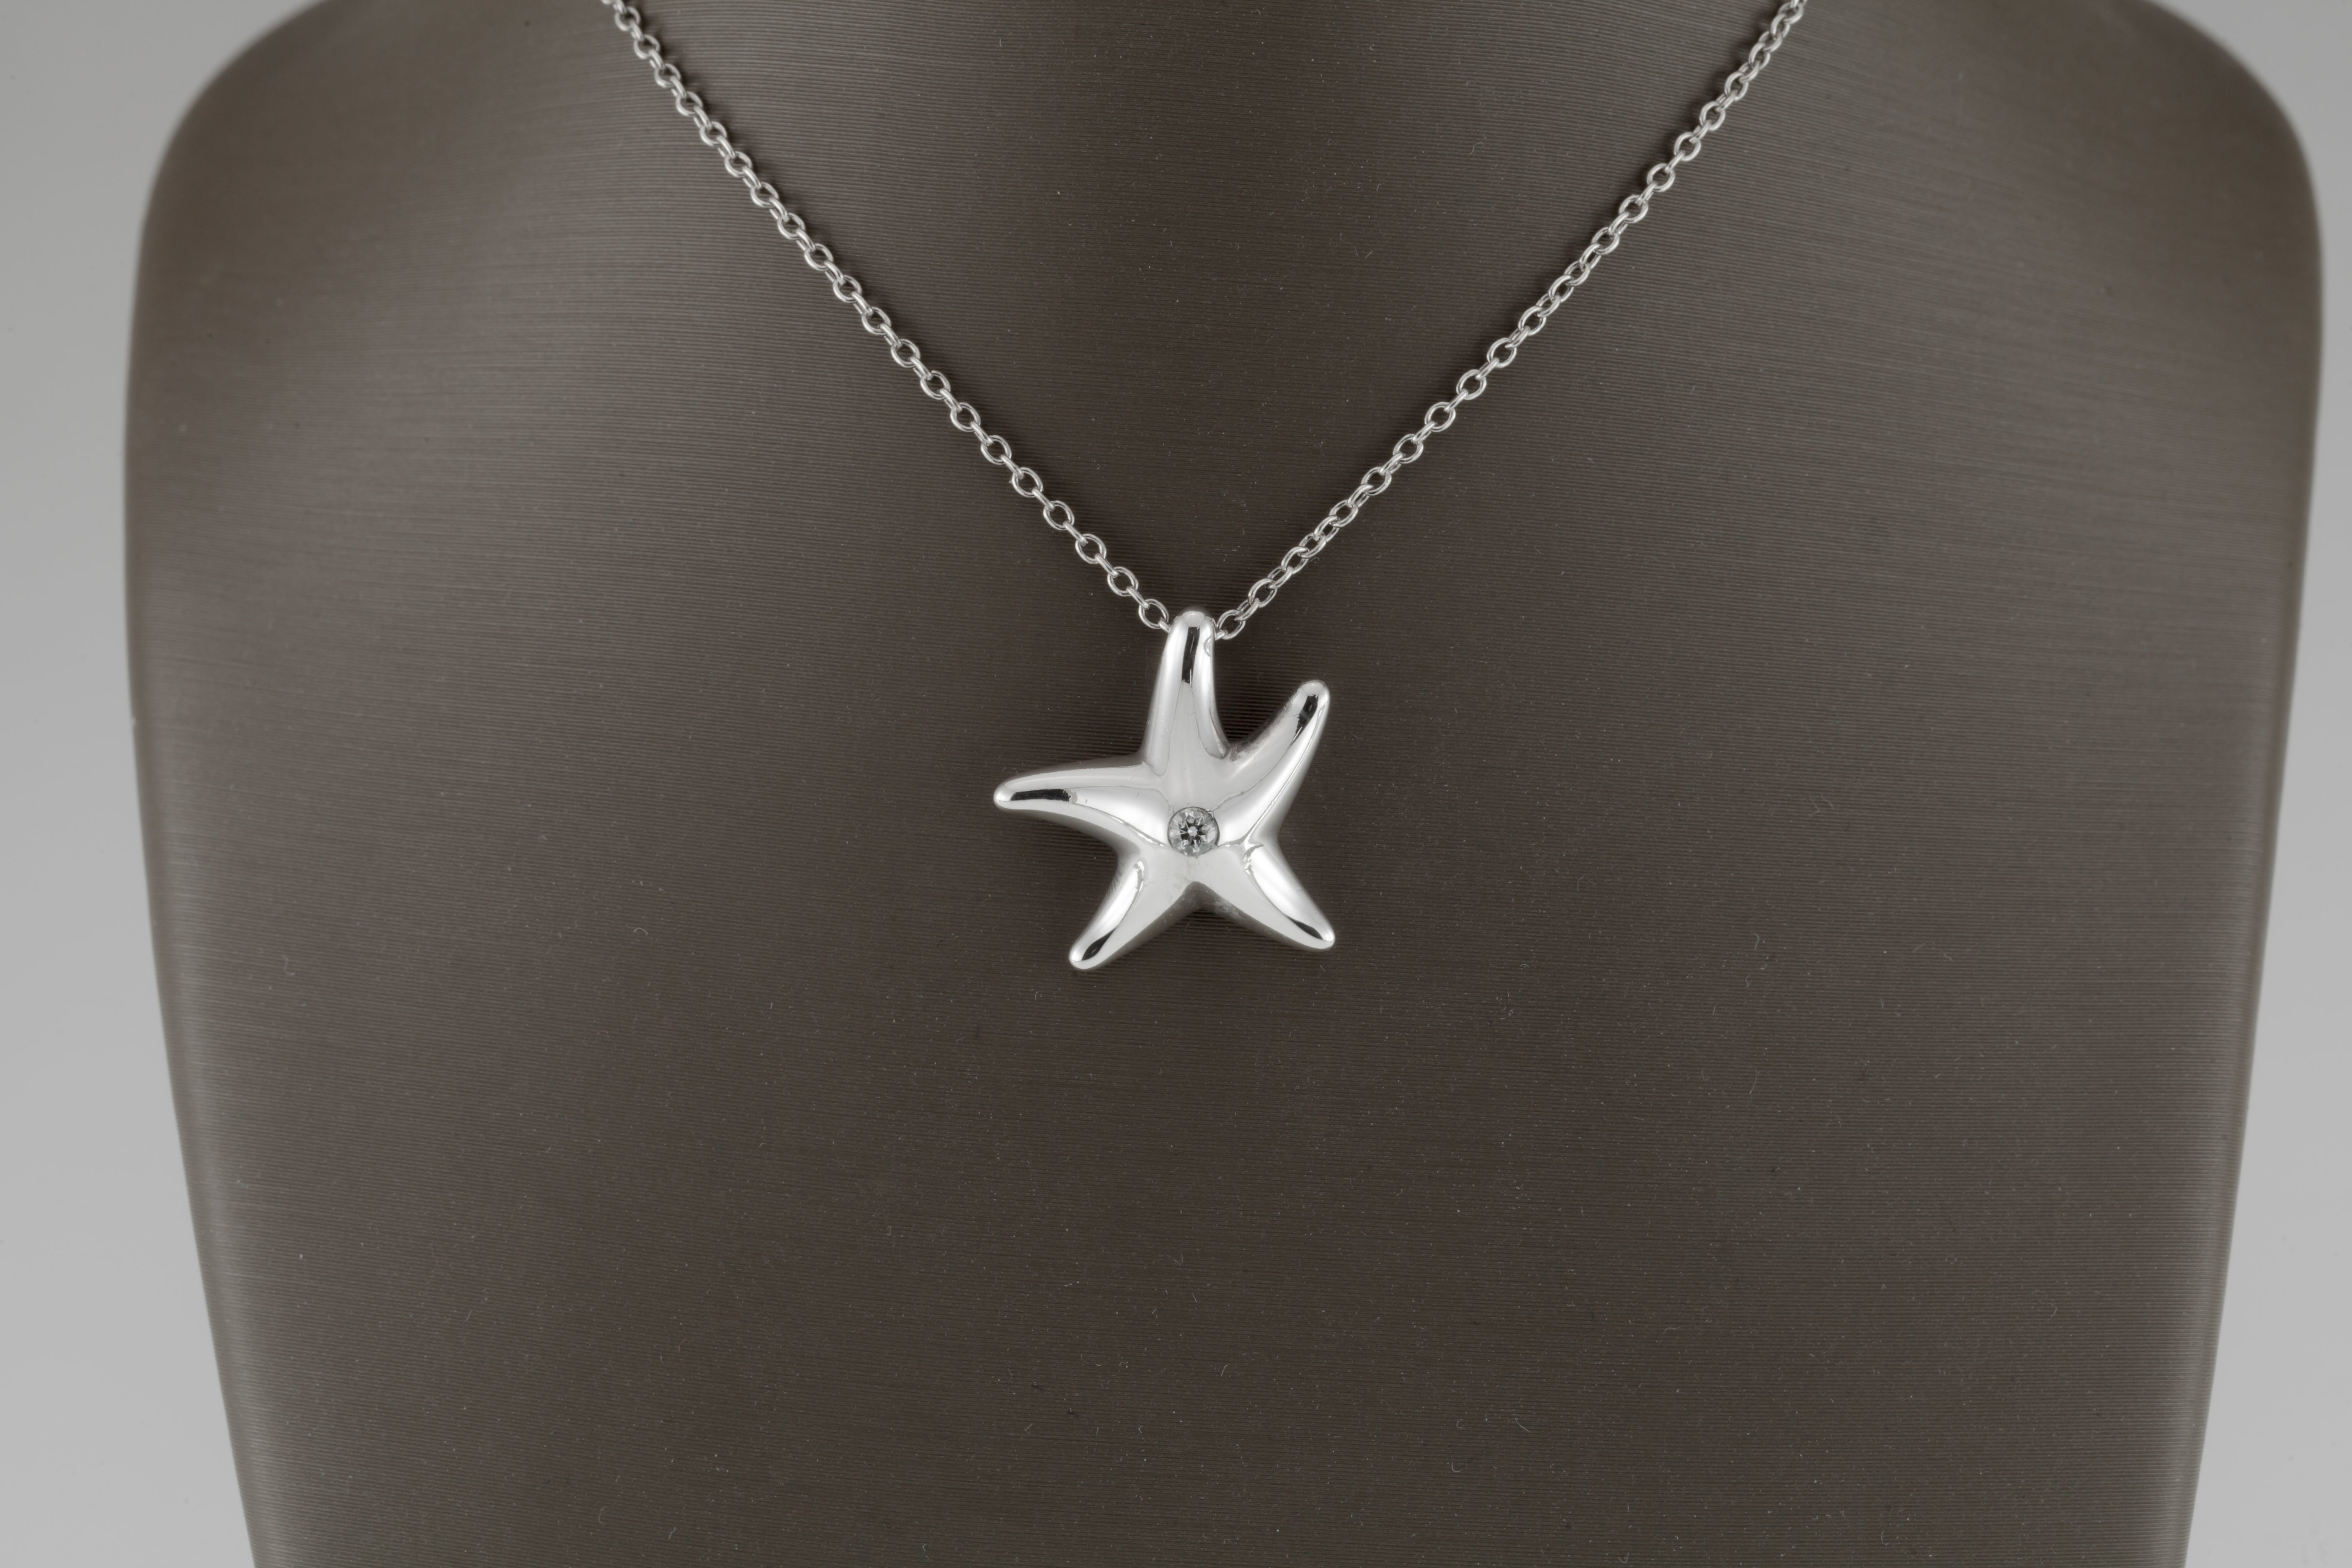 Beautiful Starfish Pendant by Elsa Peretti
Single Diamond Accent
Includes 16